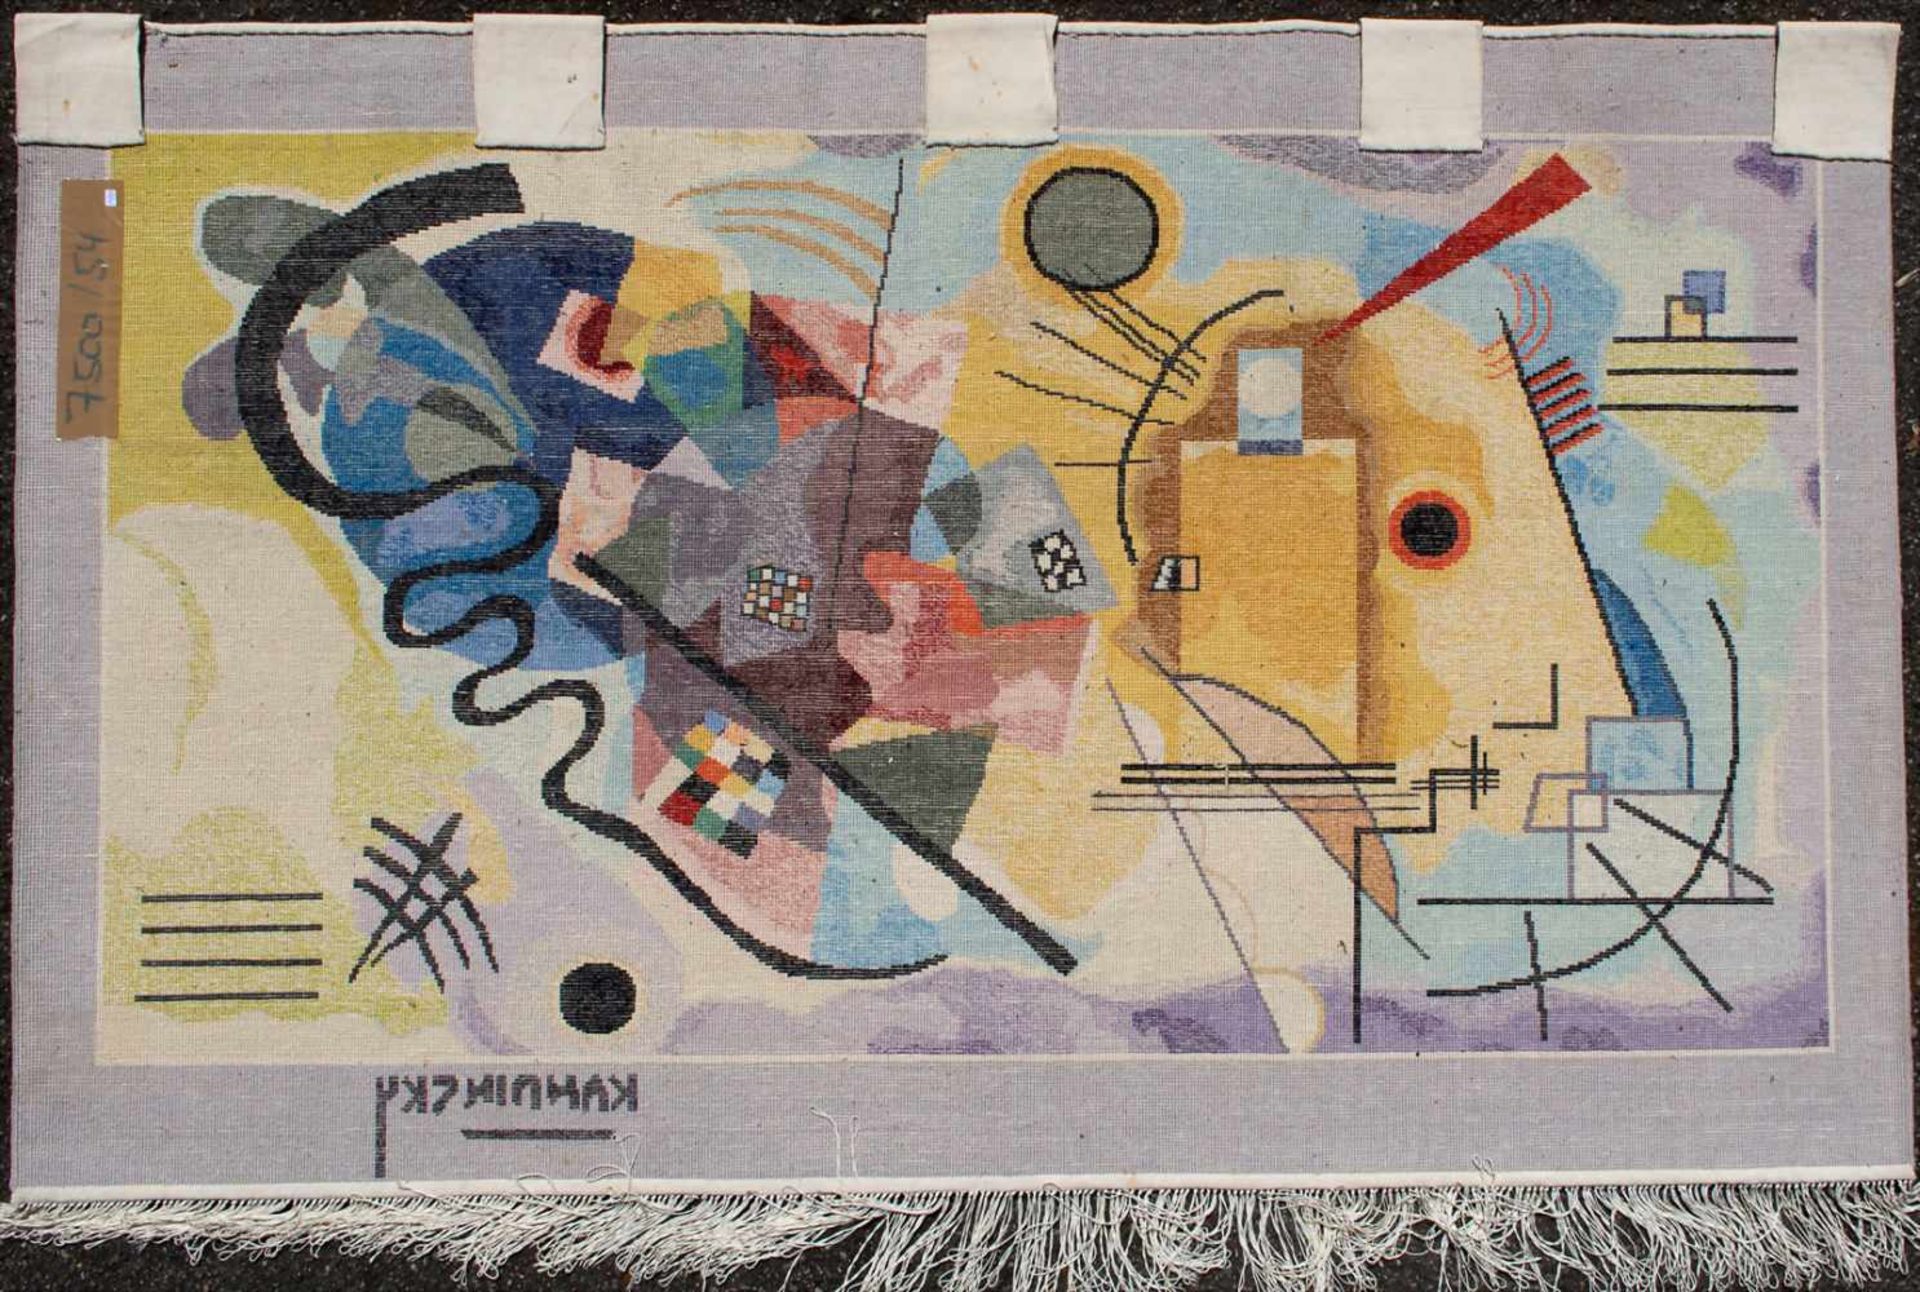 Seidenteppich 'Kandinsky' / A silk carpet 'Kandinsky'Material: Seide auf Seide,Maße: 151 x 93 cm, - Image 2 of 3